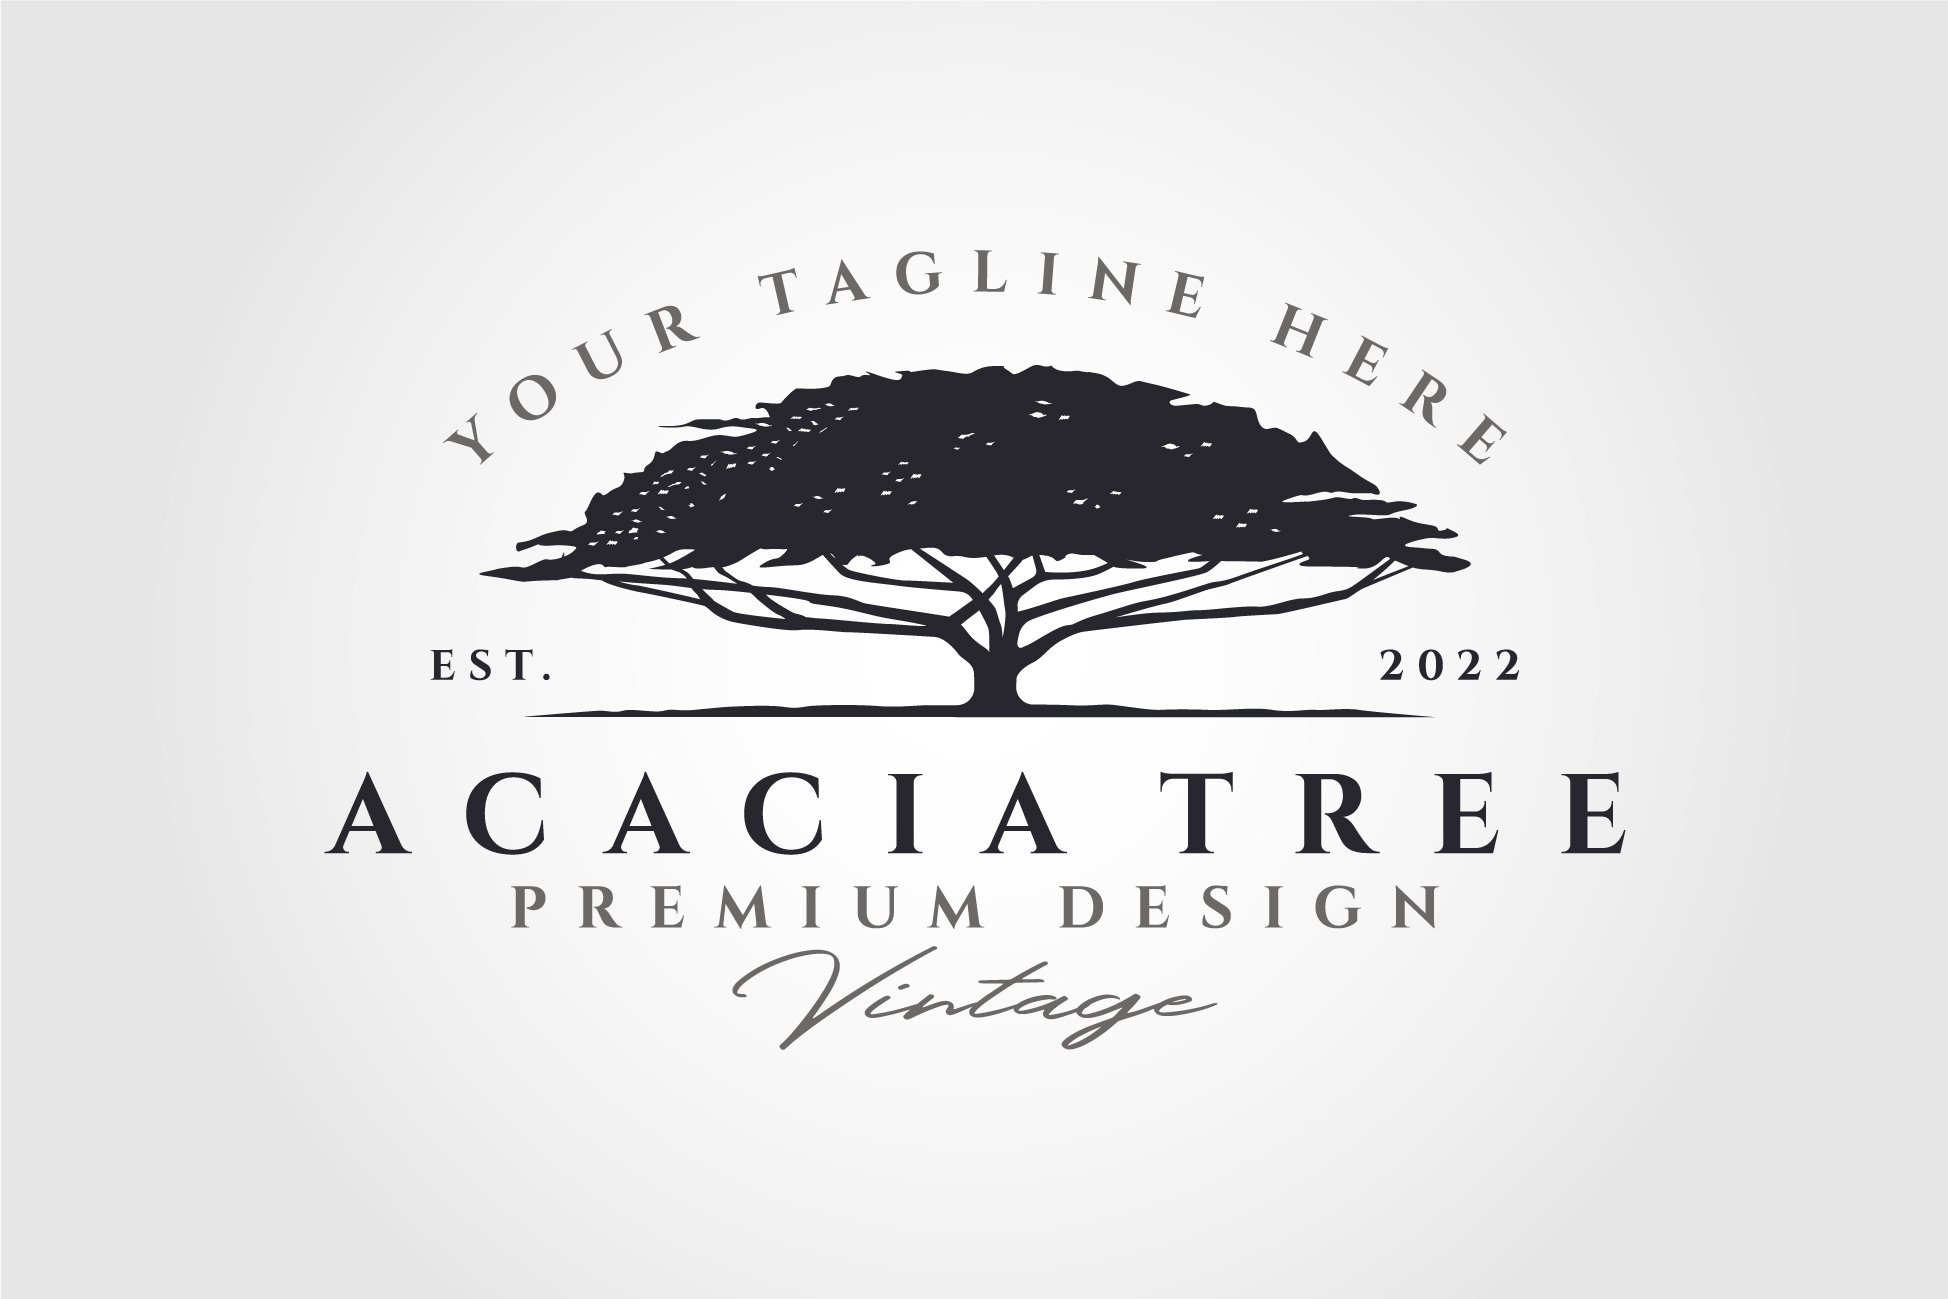 acacia tree silhouette vector logo cover image.